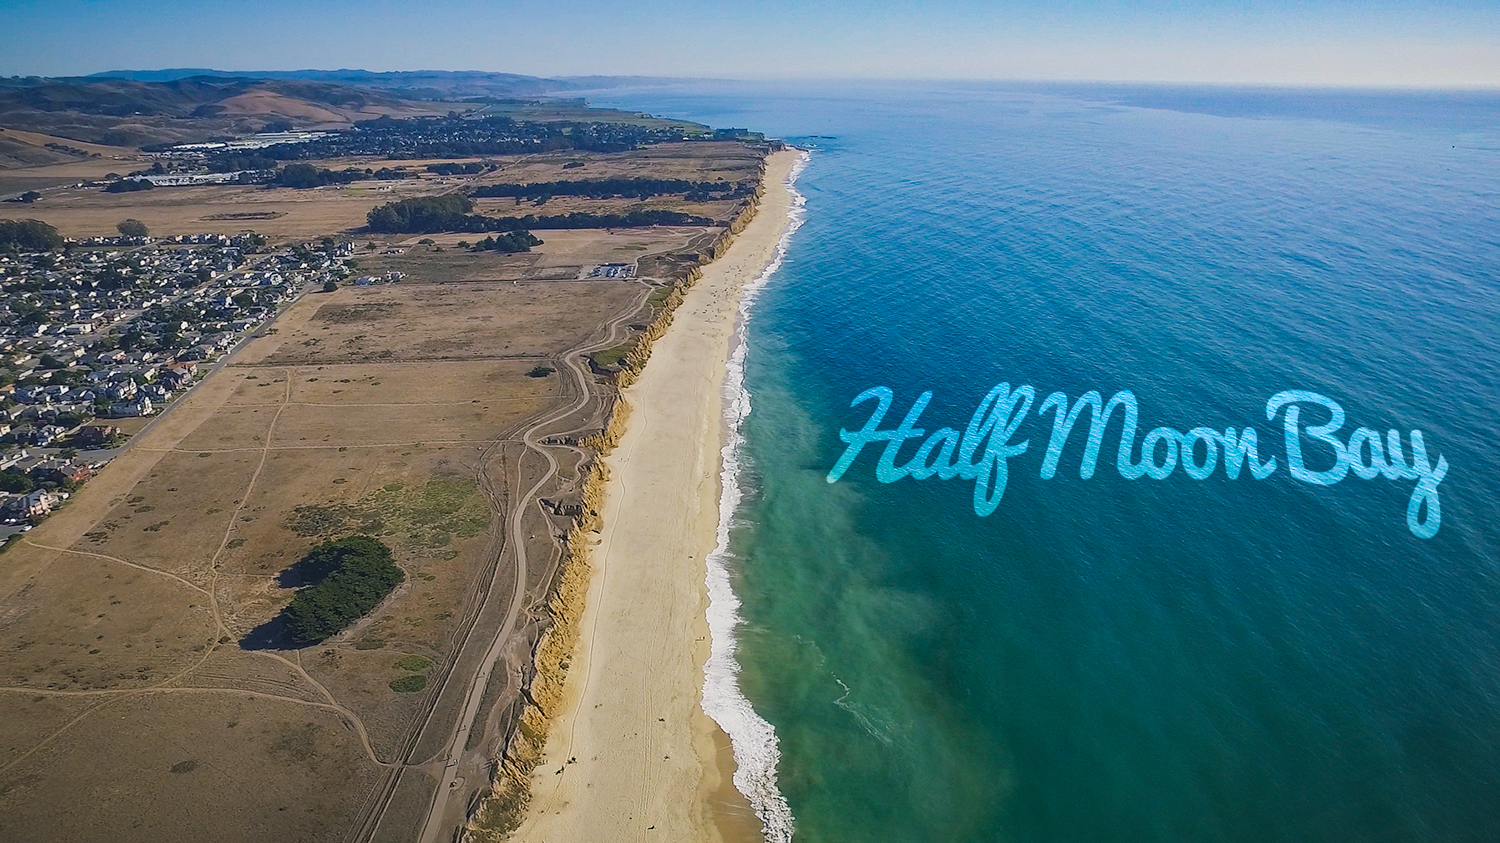 Travel Vlog - Epic Drone Flight Over California Coast!